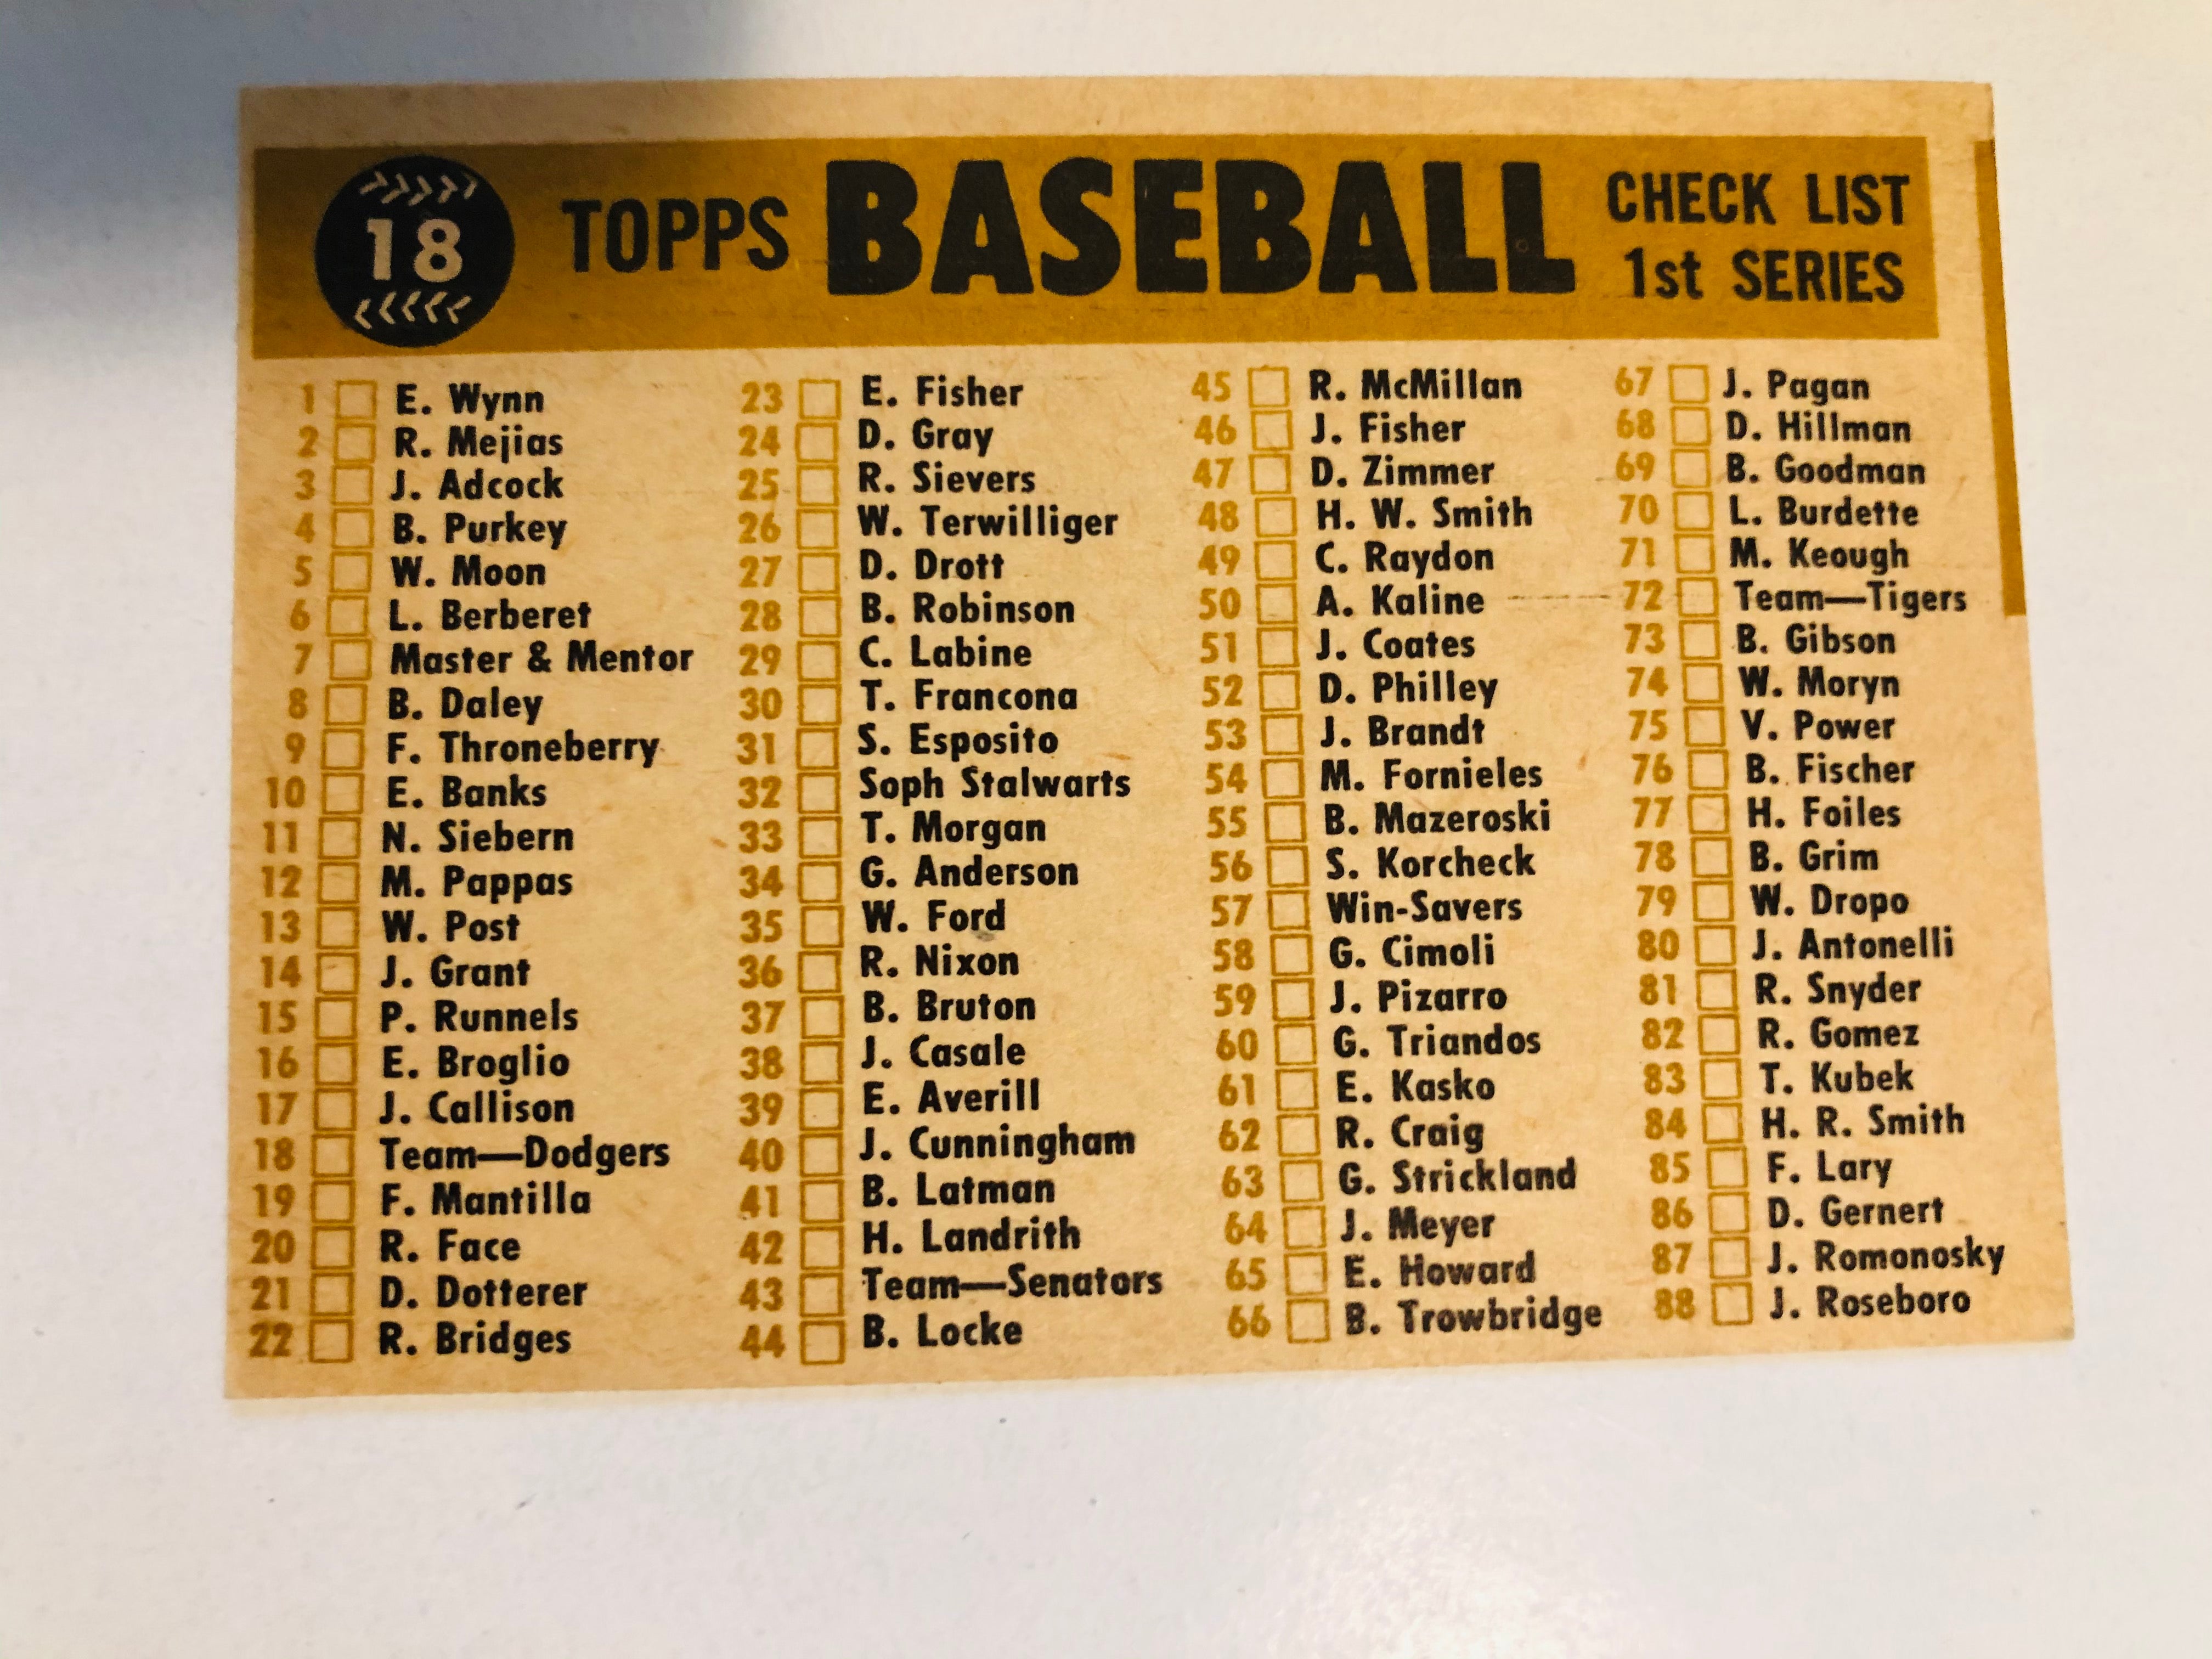 1960 Topps LA Dodgers baseball team card